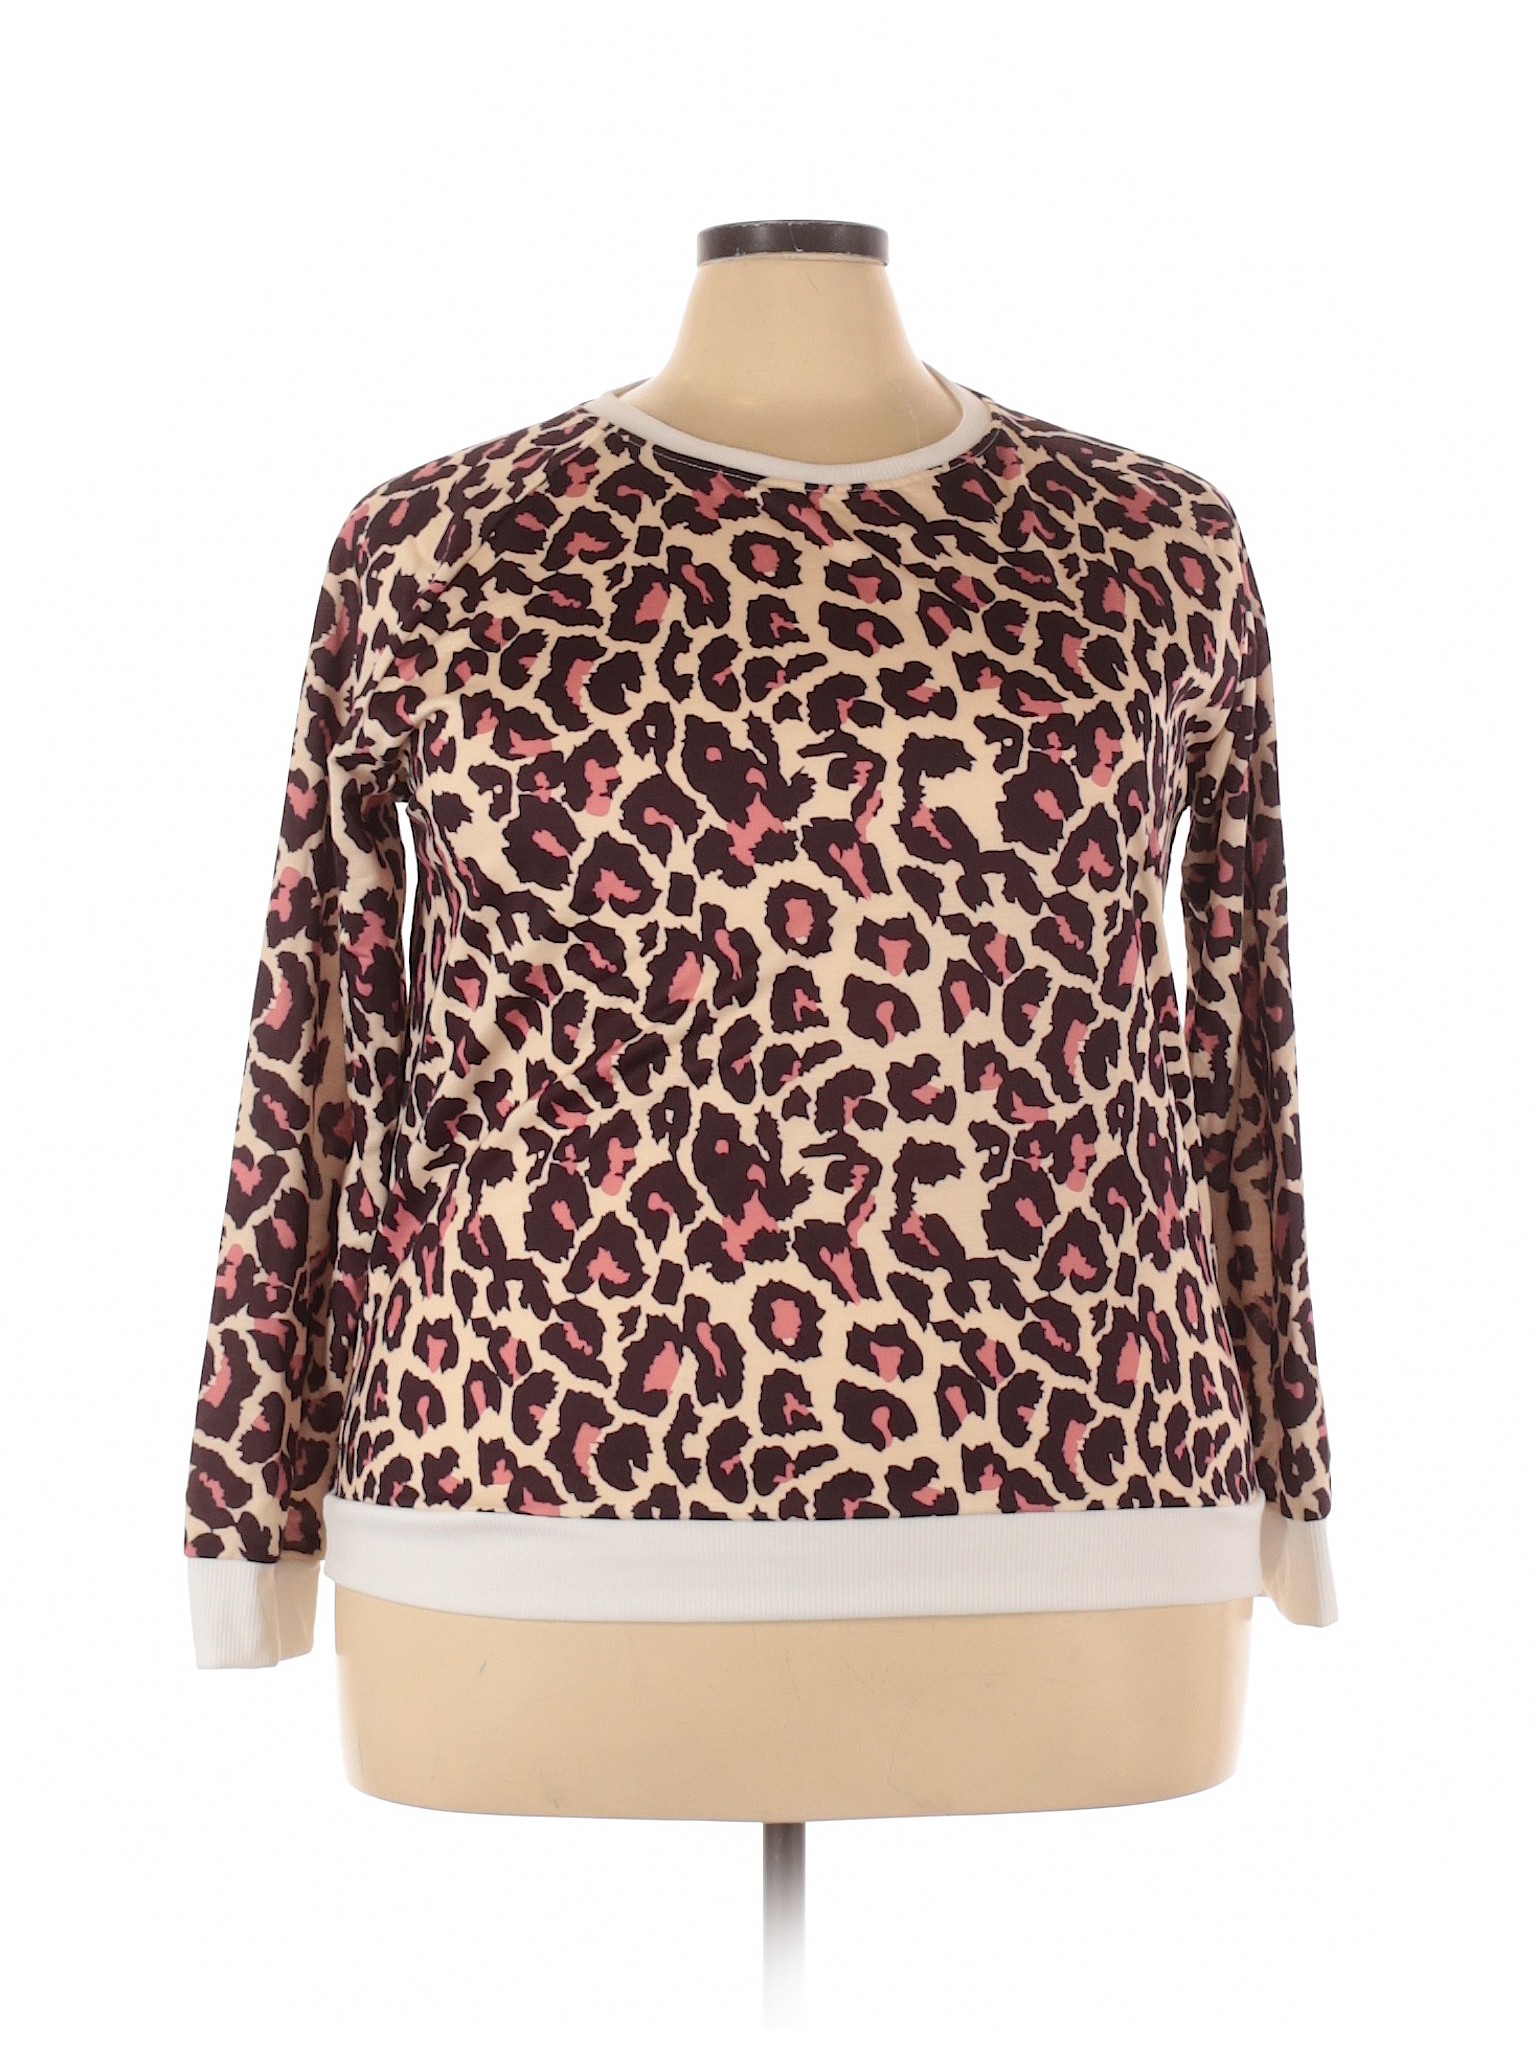 Zanzea Collection Women Brown Sweatshirt 5X Plus | eBay